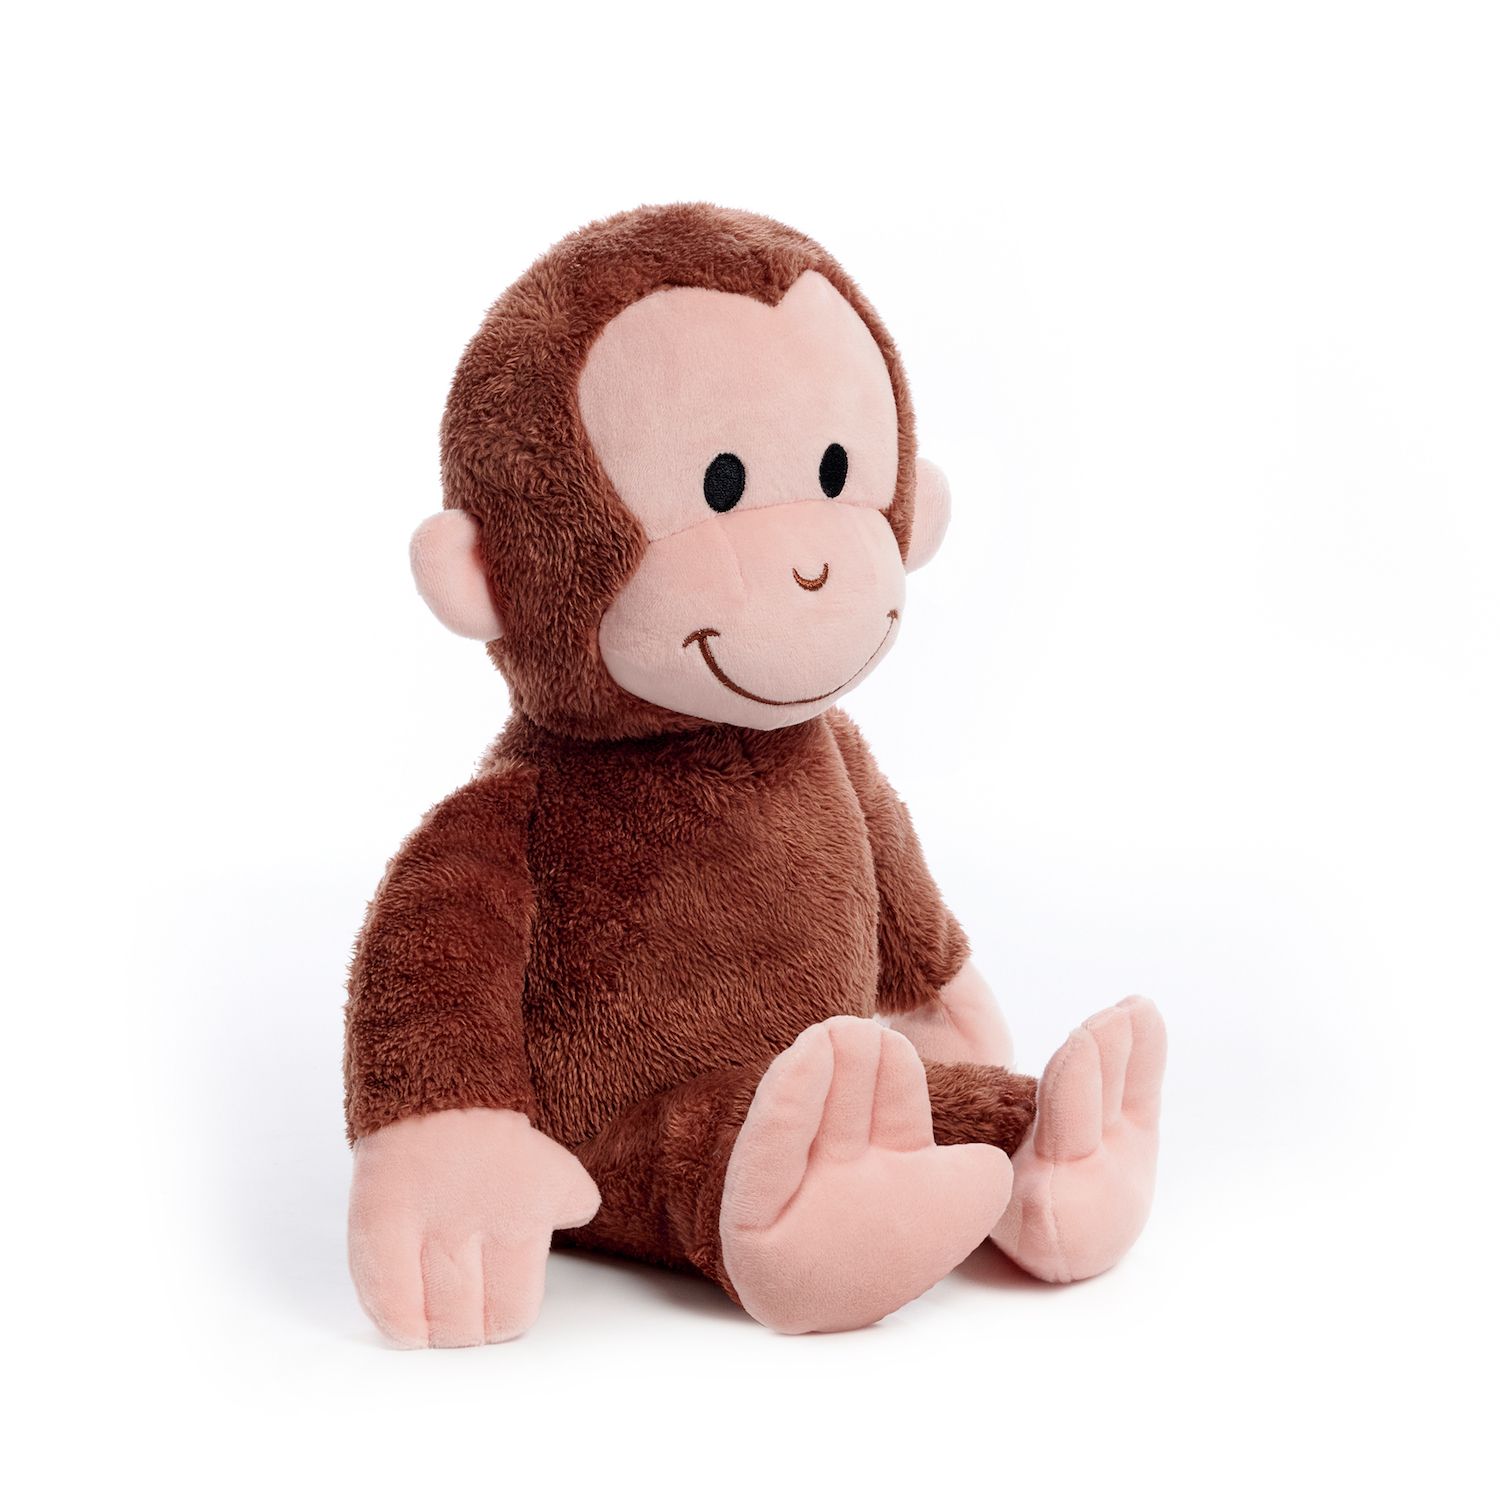 where can i buy a curious george stuffed animal